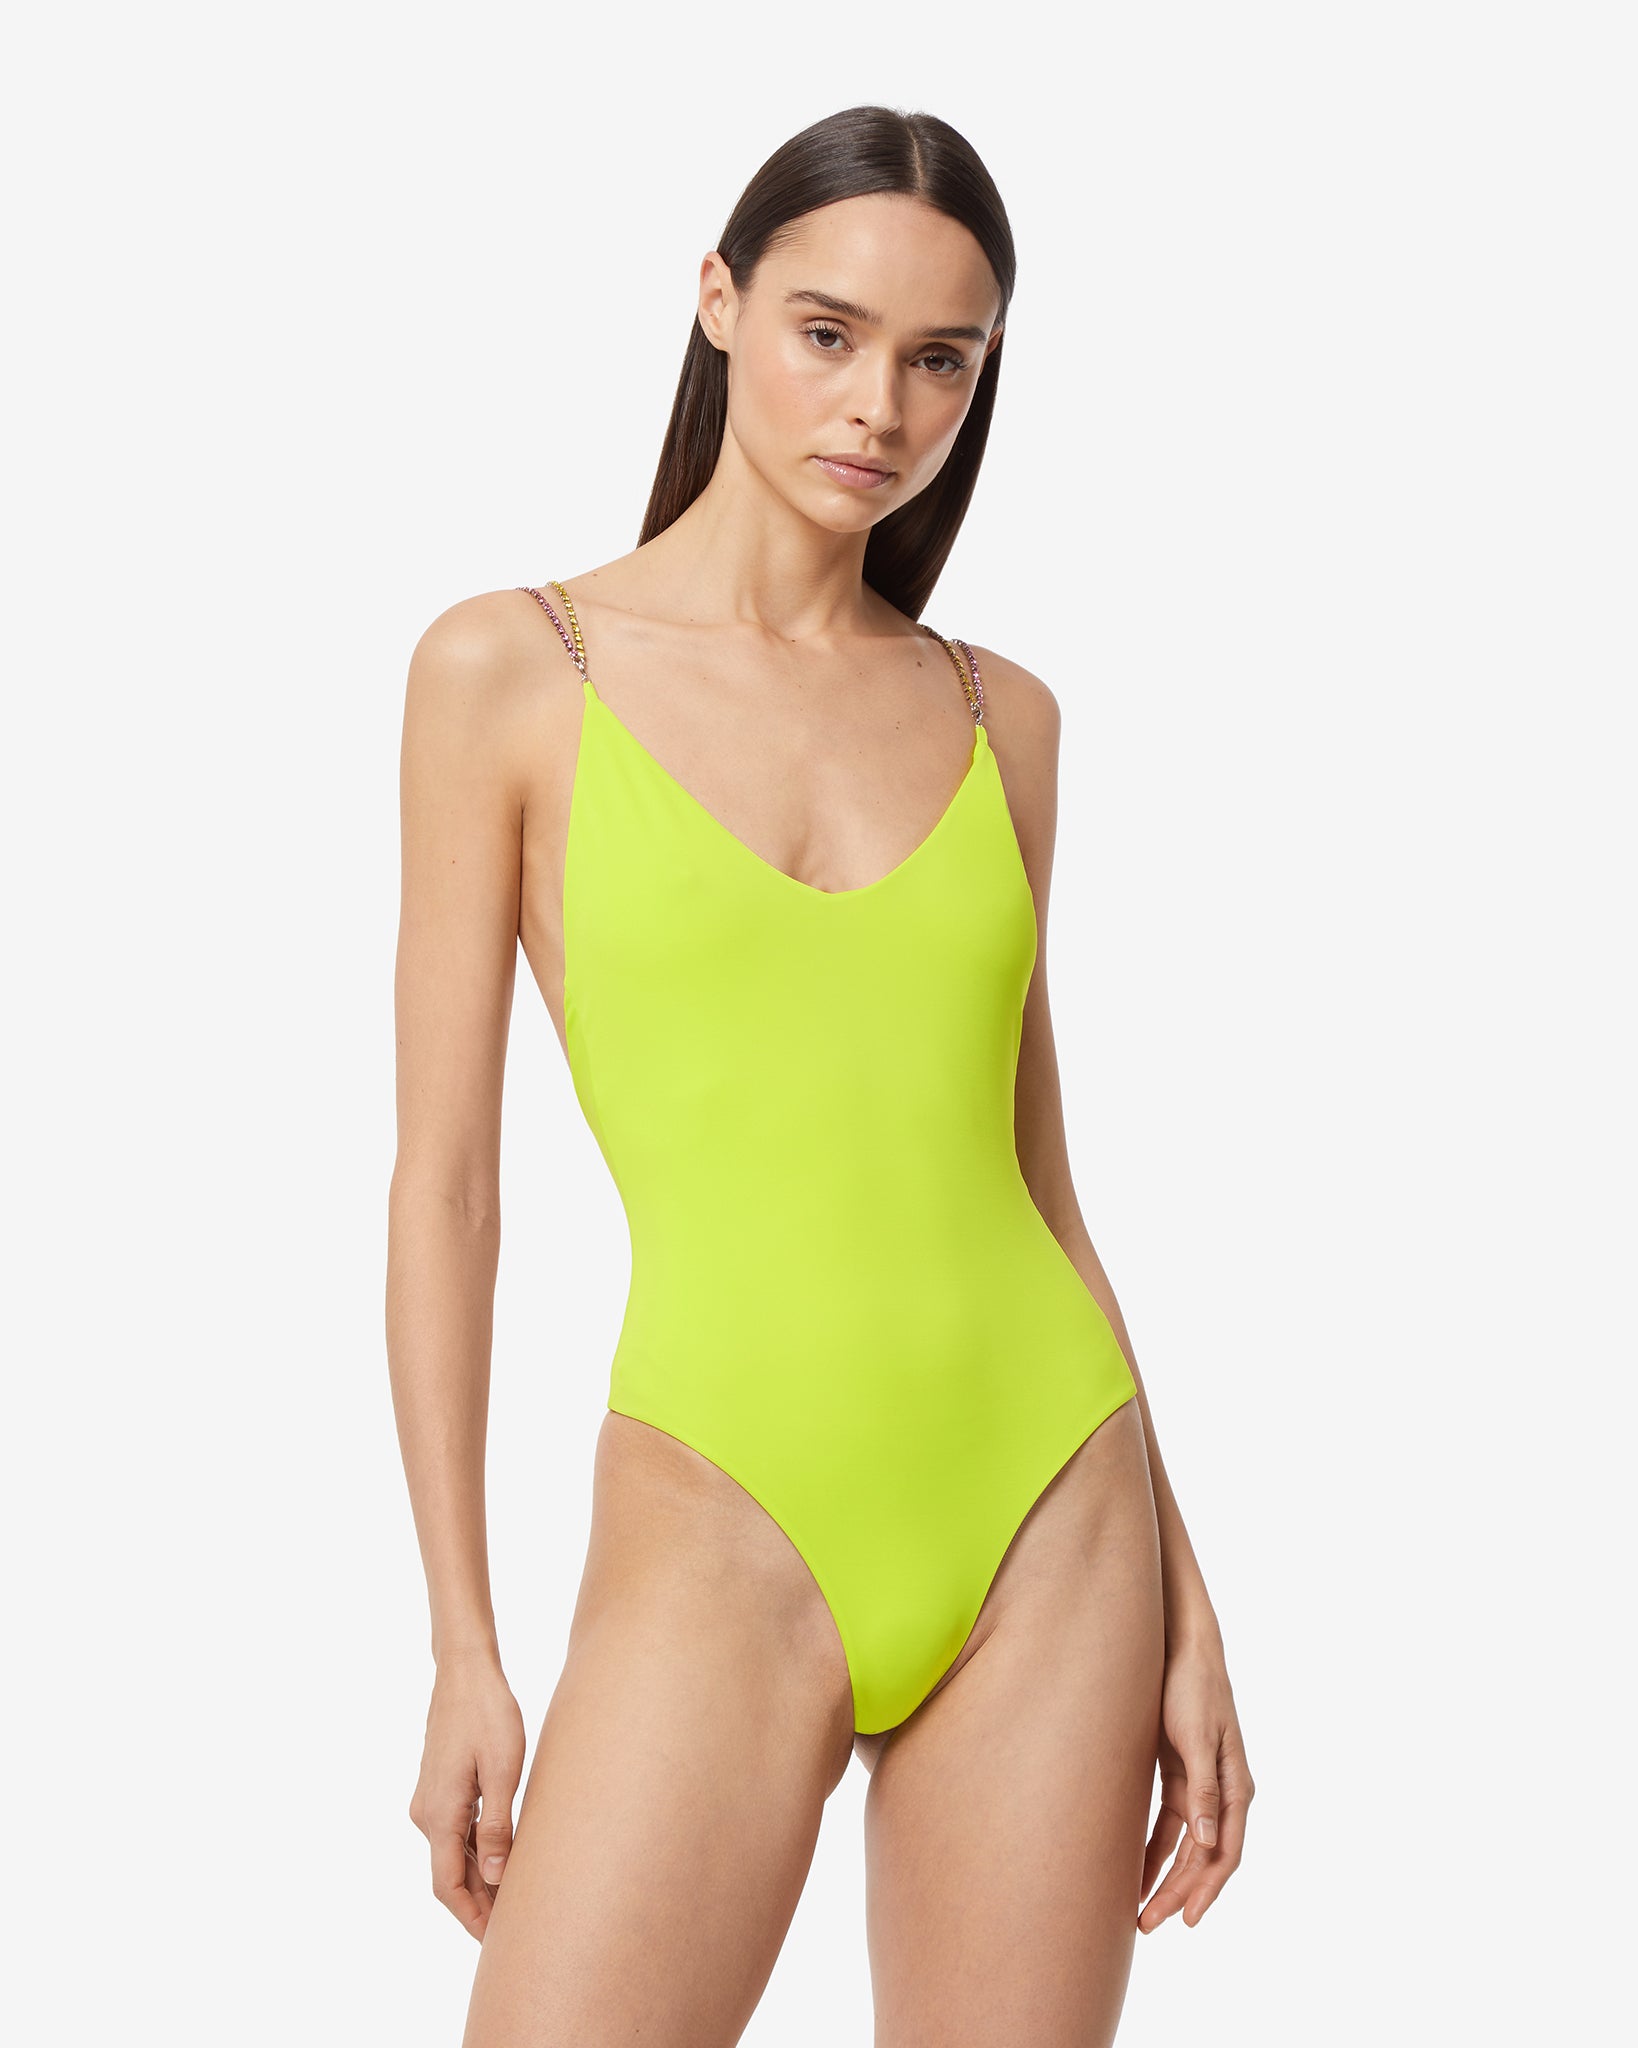 VKEKIEO One-Piece Swimsuit One Shoulder Bra Style Support Green L